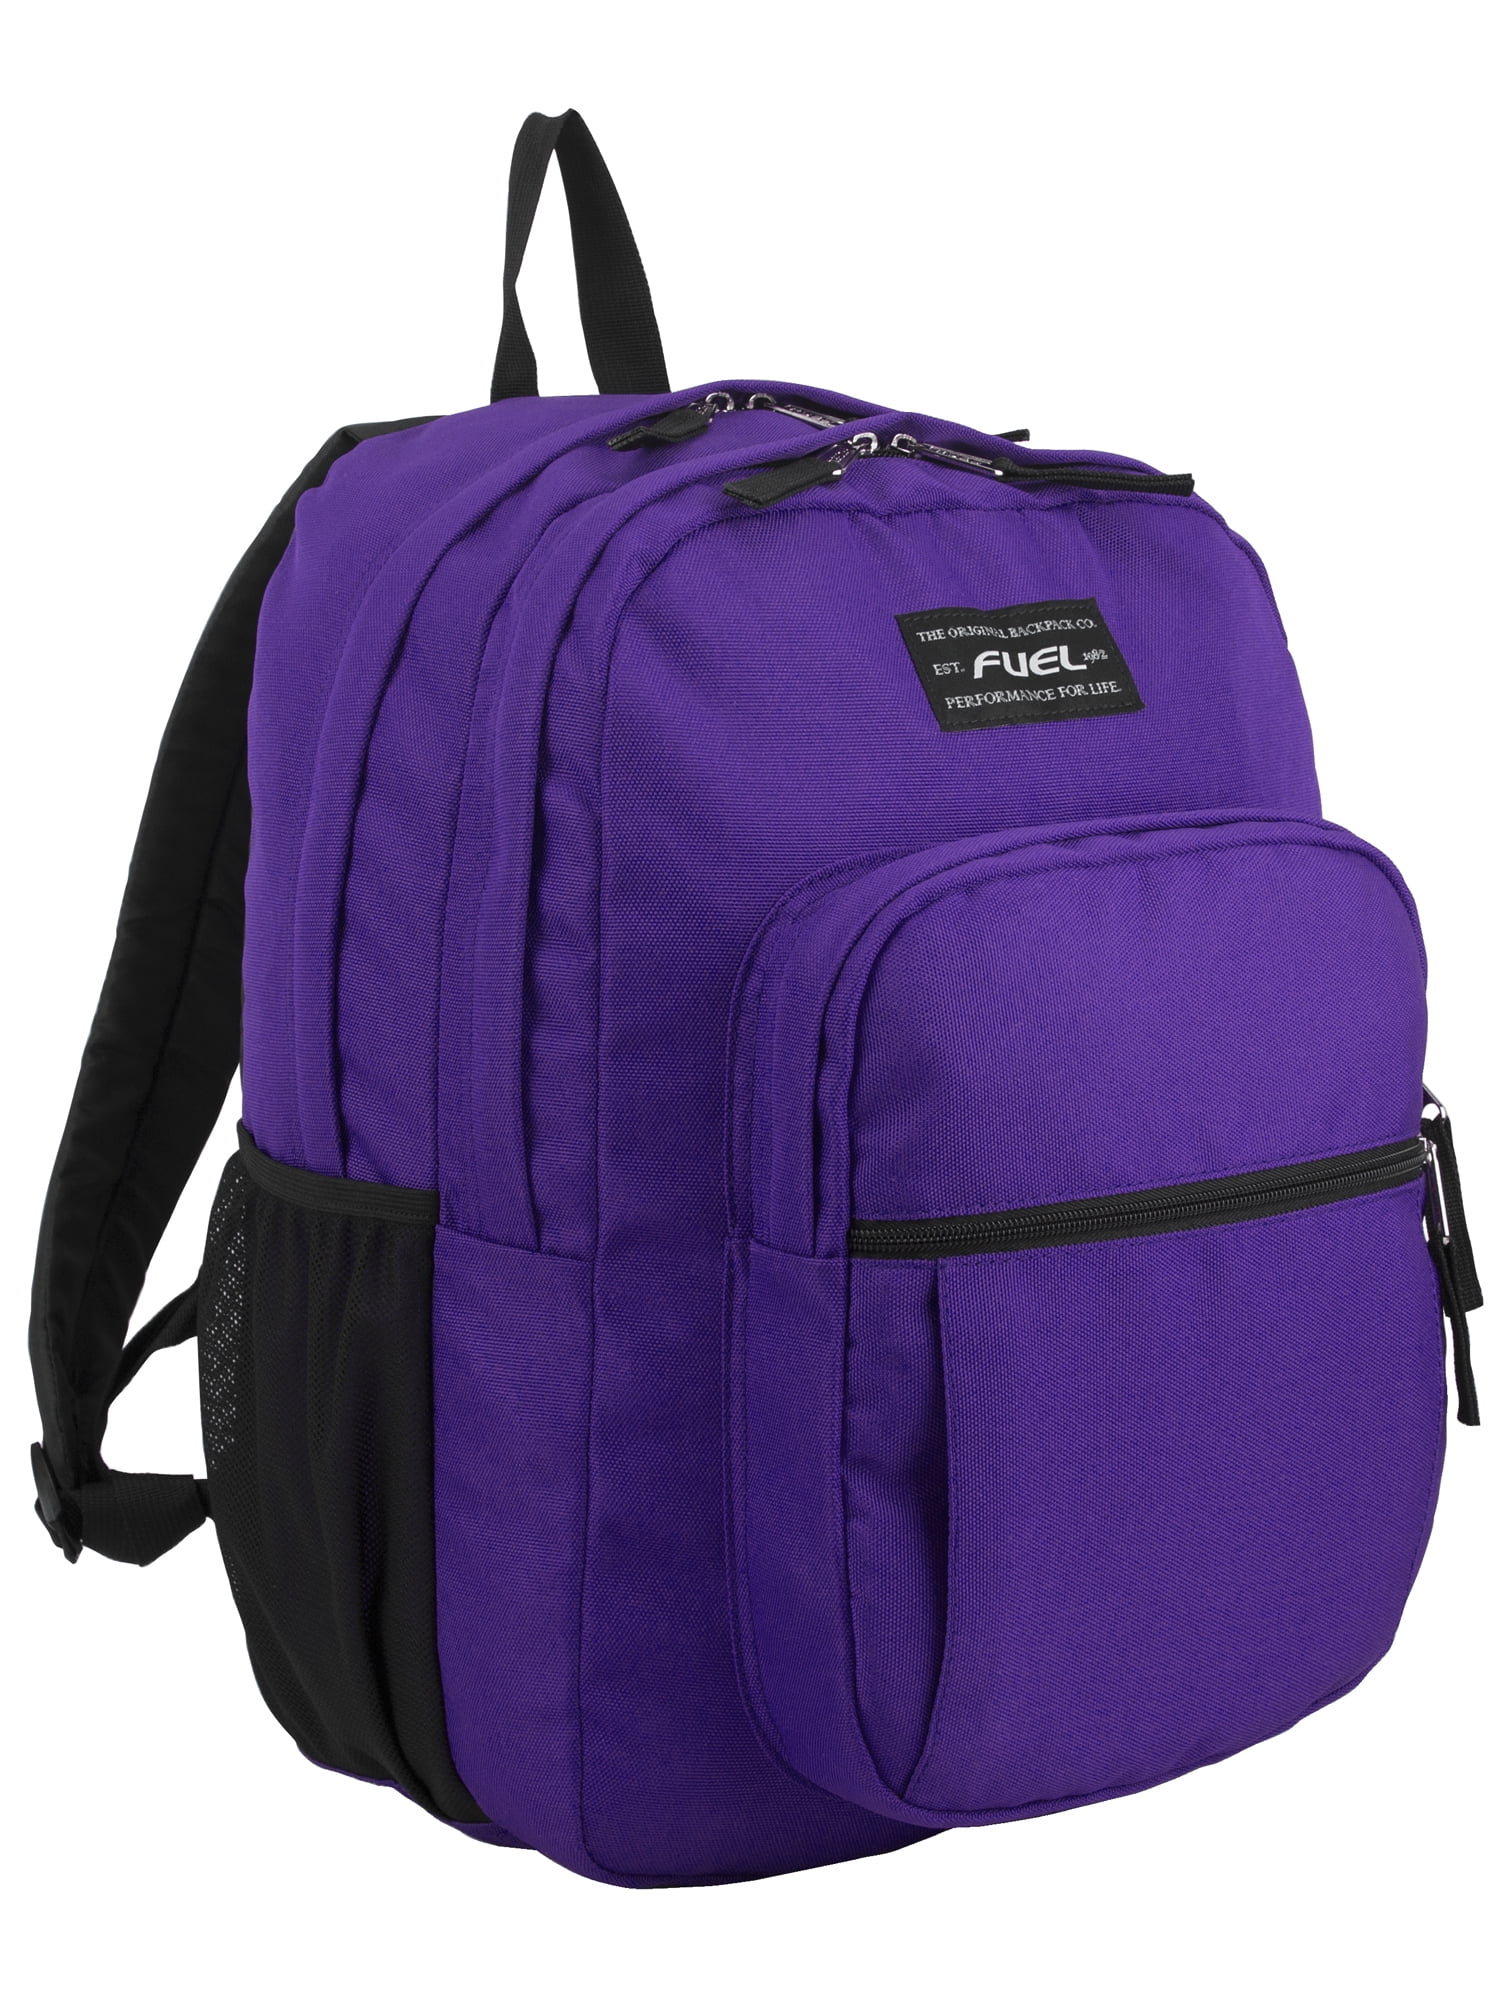 Fuel Legacy Deluxe Classic Backpack, Purple - Walmart.com